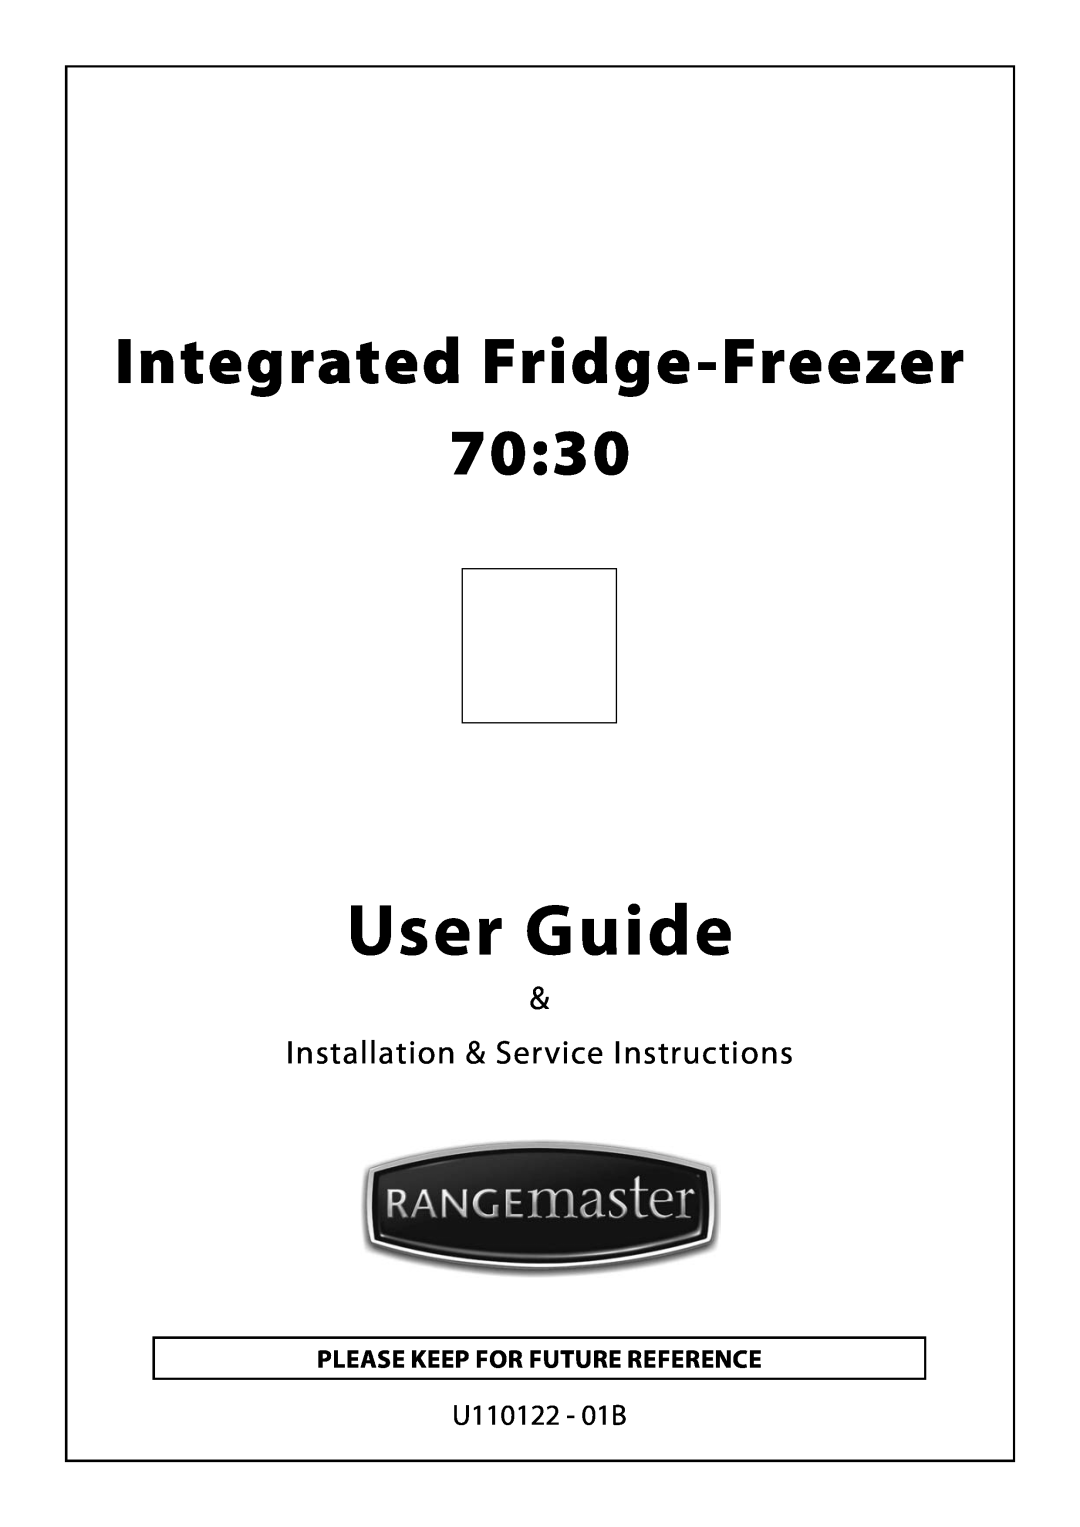 Rangemaster U110122-01B manual Please keeP for fUtUre reference, User Guide, Integrated Fridge-Freezer, U110122 - 01B 